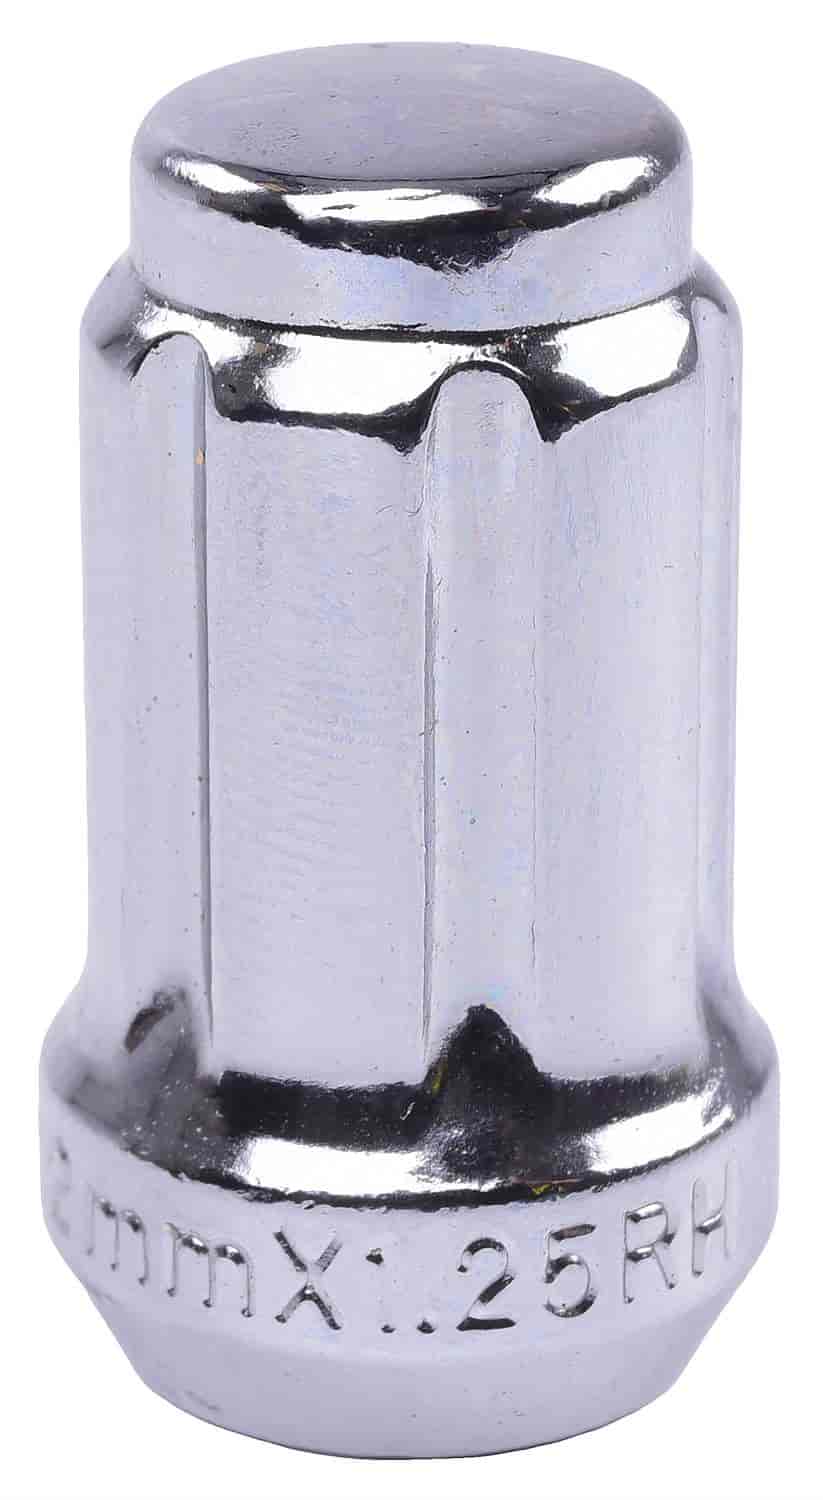 Spline Drive Lug Nuts, Short Closed-End [12mm x 1.25 RH, Chrome]